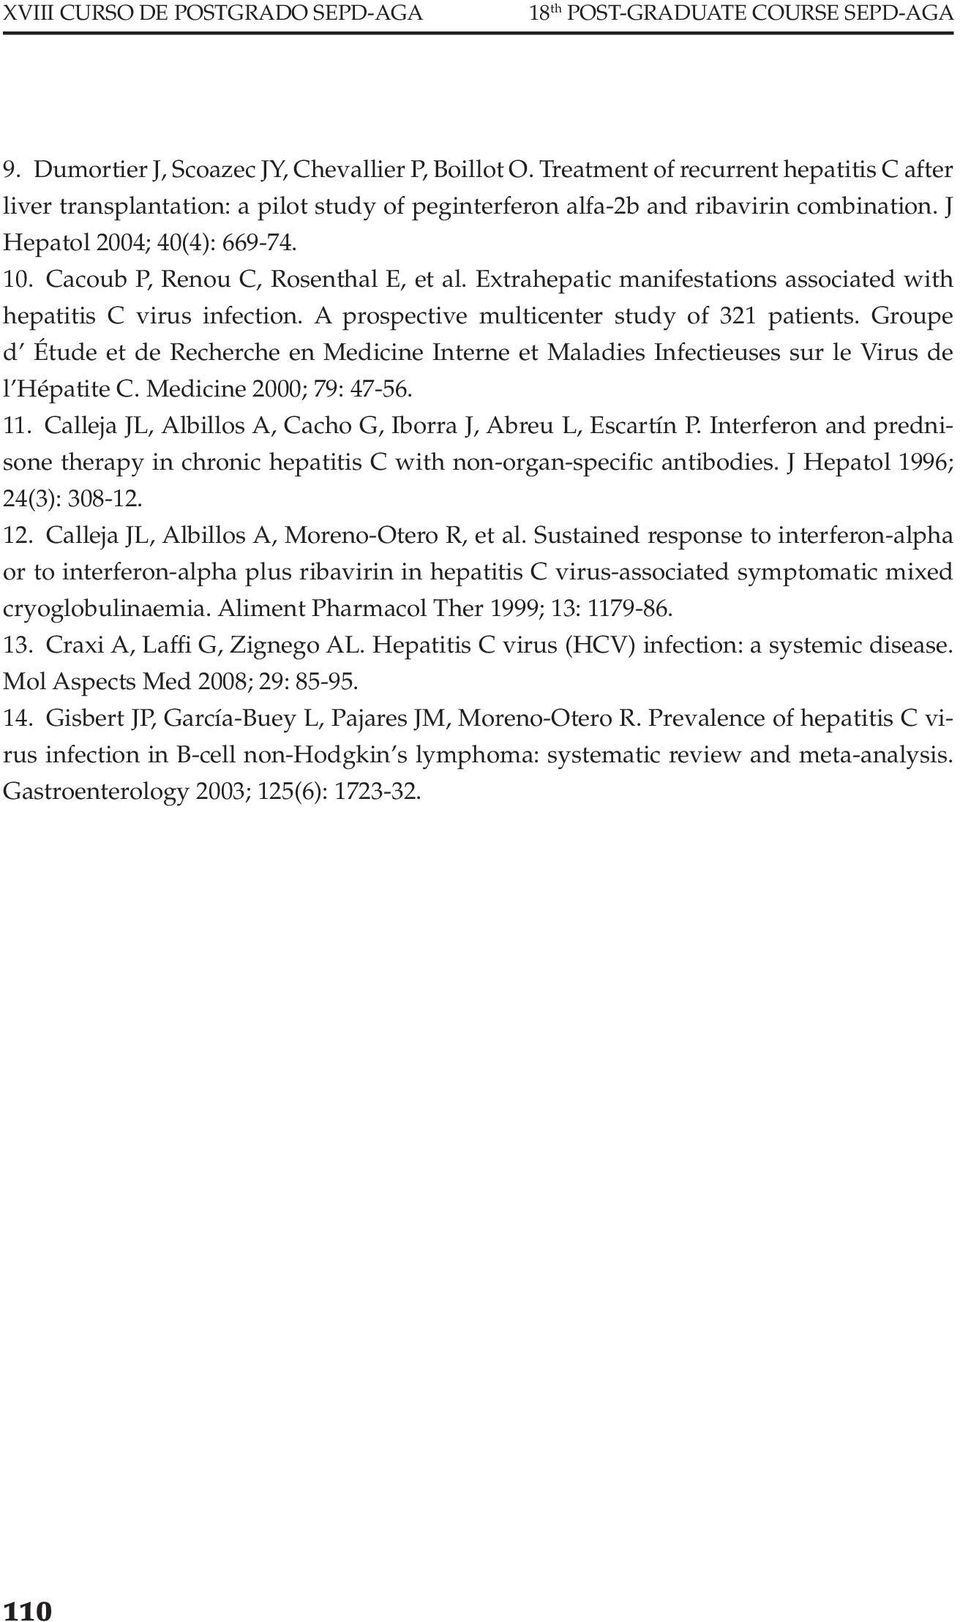 Cacoub P, Renou C, Rosenthal E, et al. Extrahepatic manifestations associated with hepatitis C virus infection. A prospective multicenter study of 321 patients.